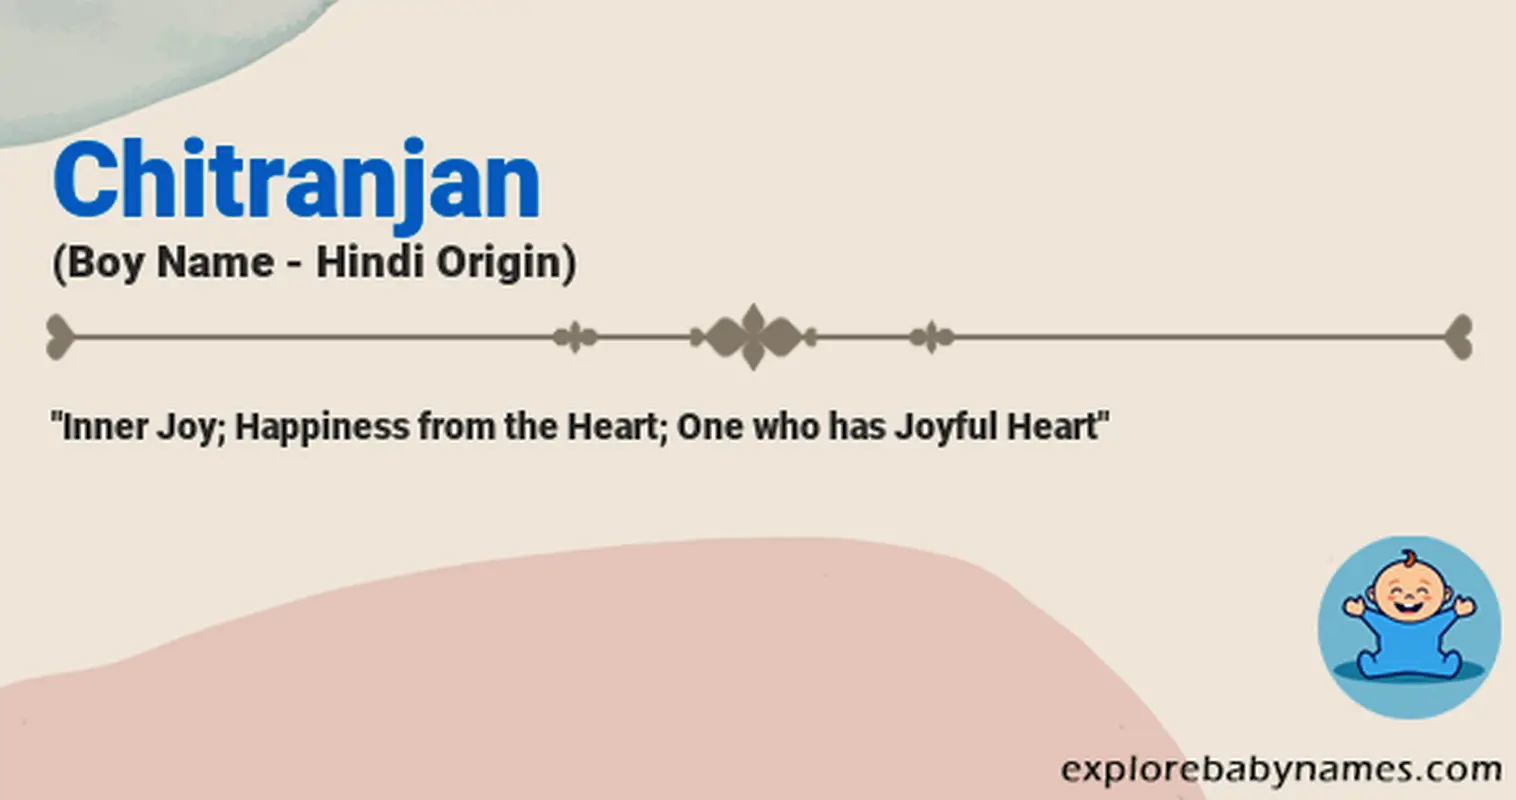 Meaning of Chitranjan